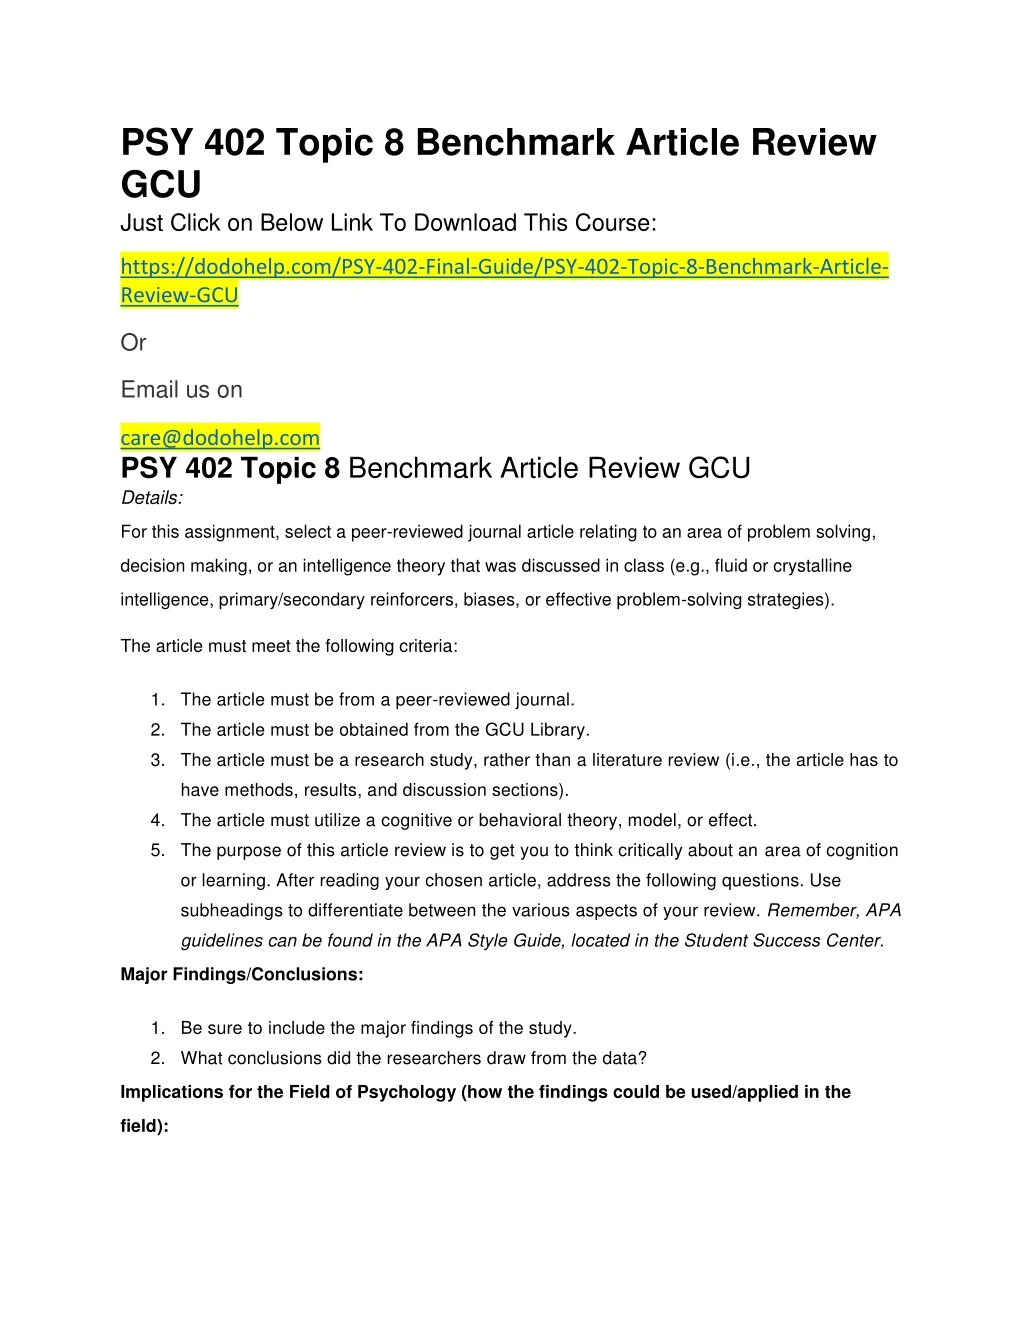 article review gcu